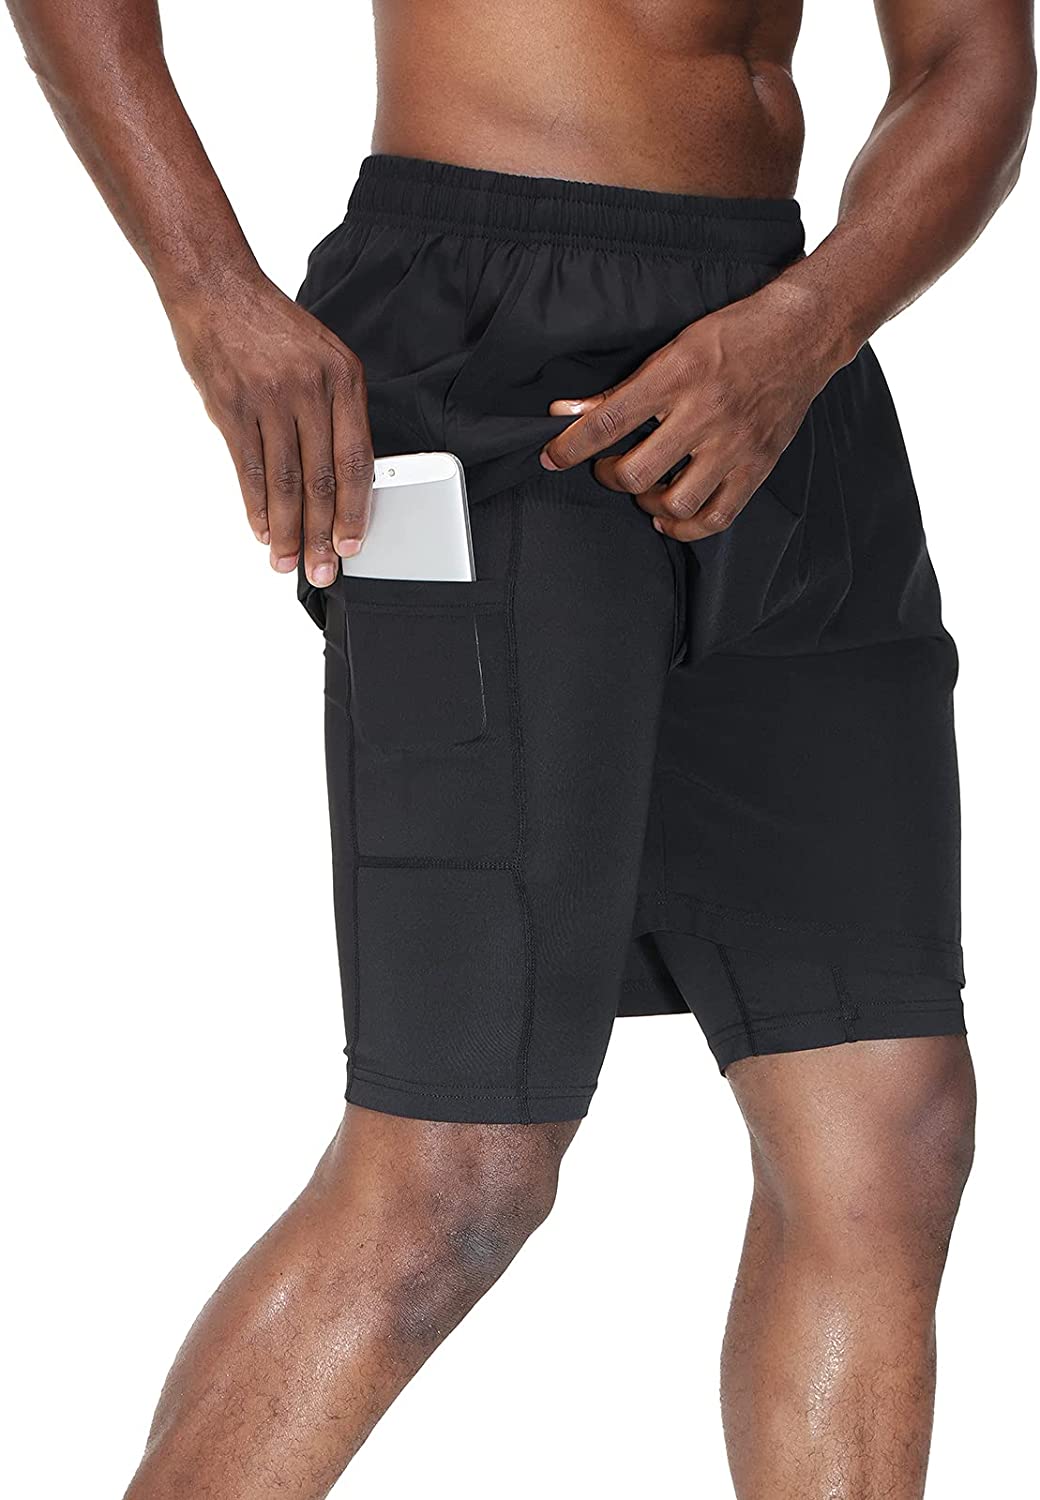 HMIYA Men's Sport Shorts Quick Dry Running Gym Casual Short Lightweight with Zip Pockets 